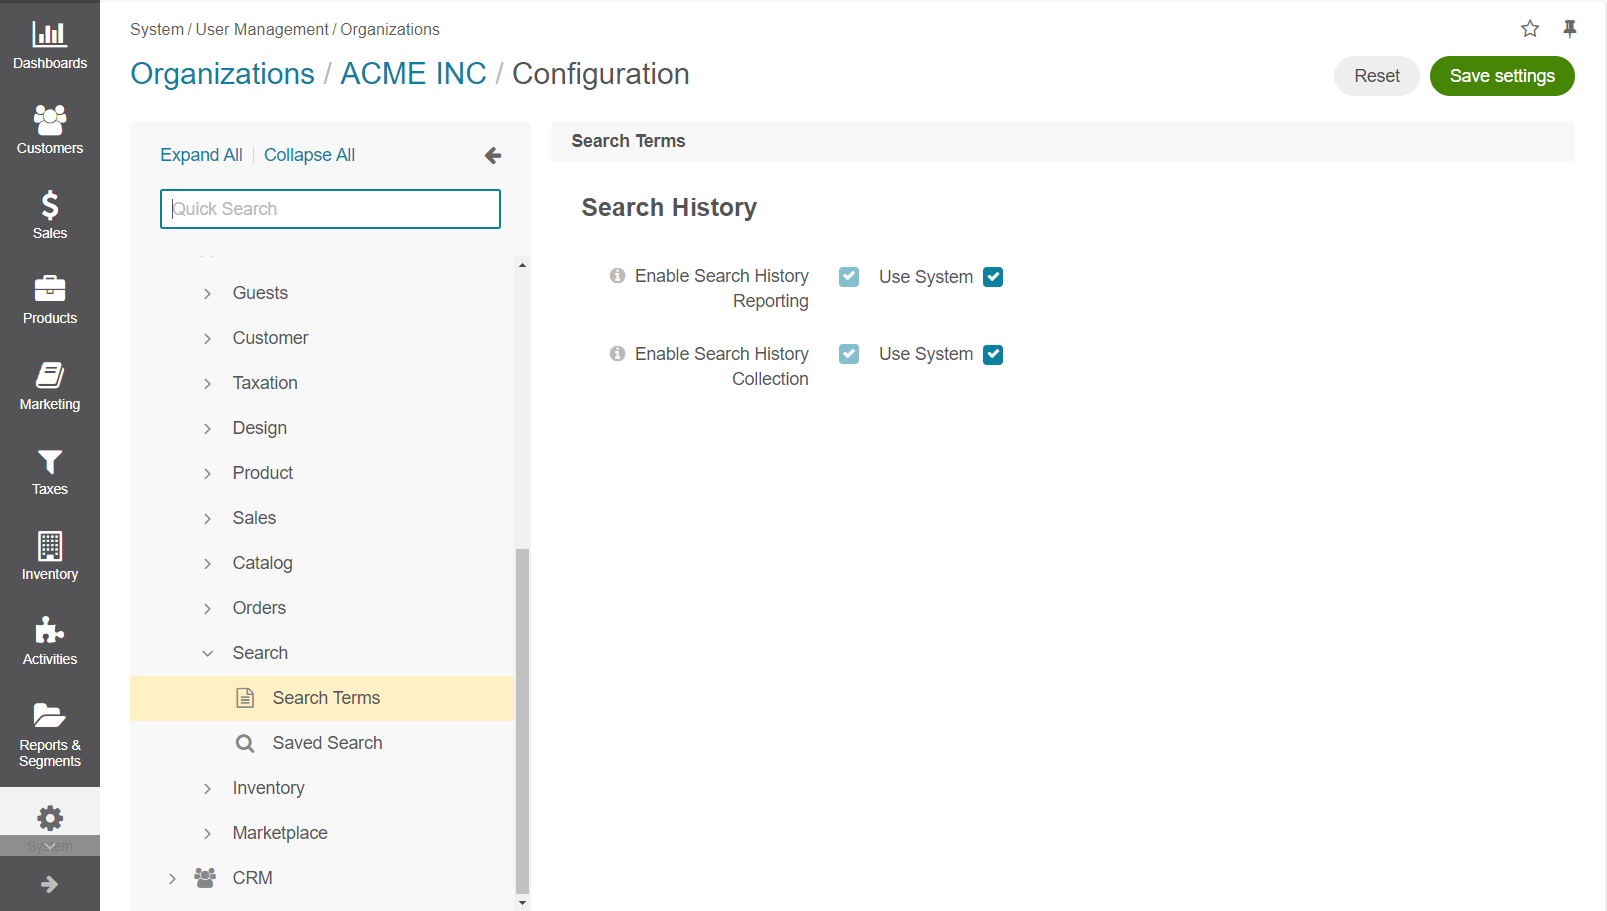 Search history configuration options per organization